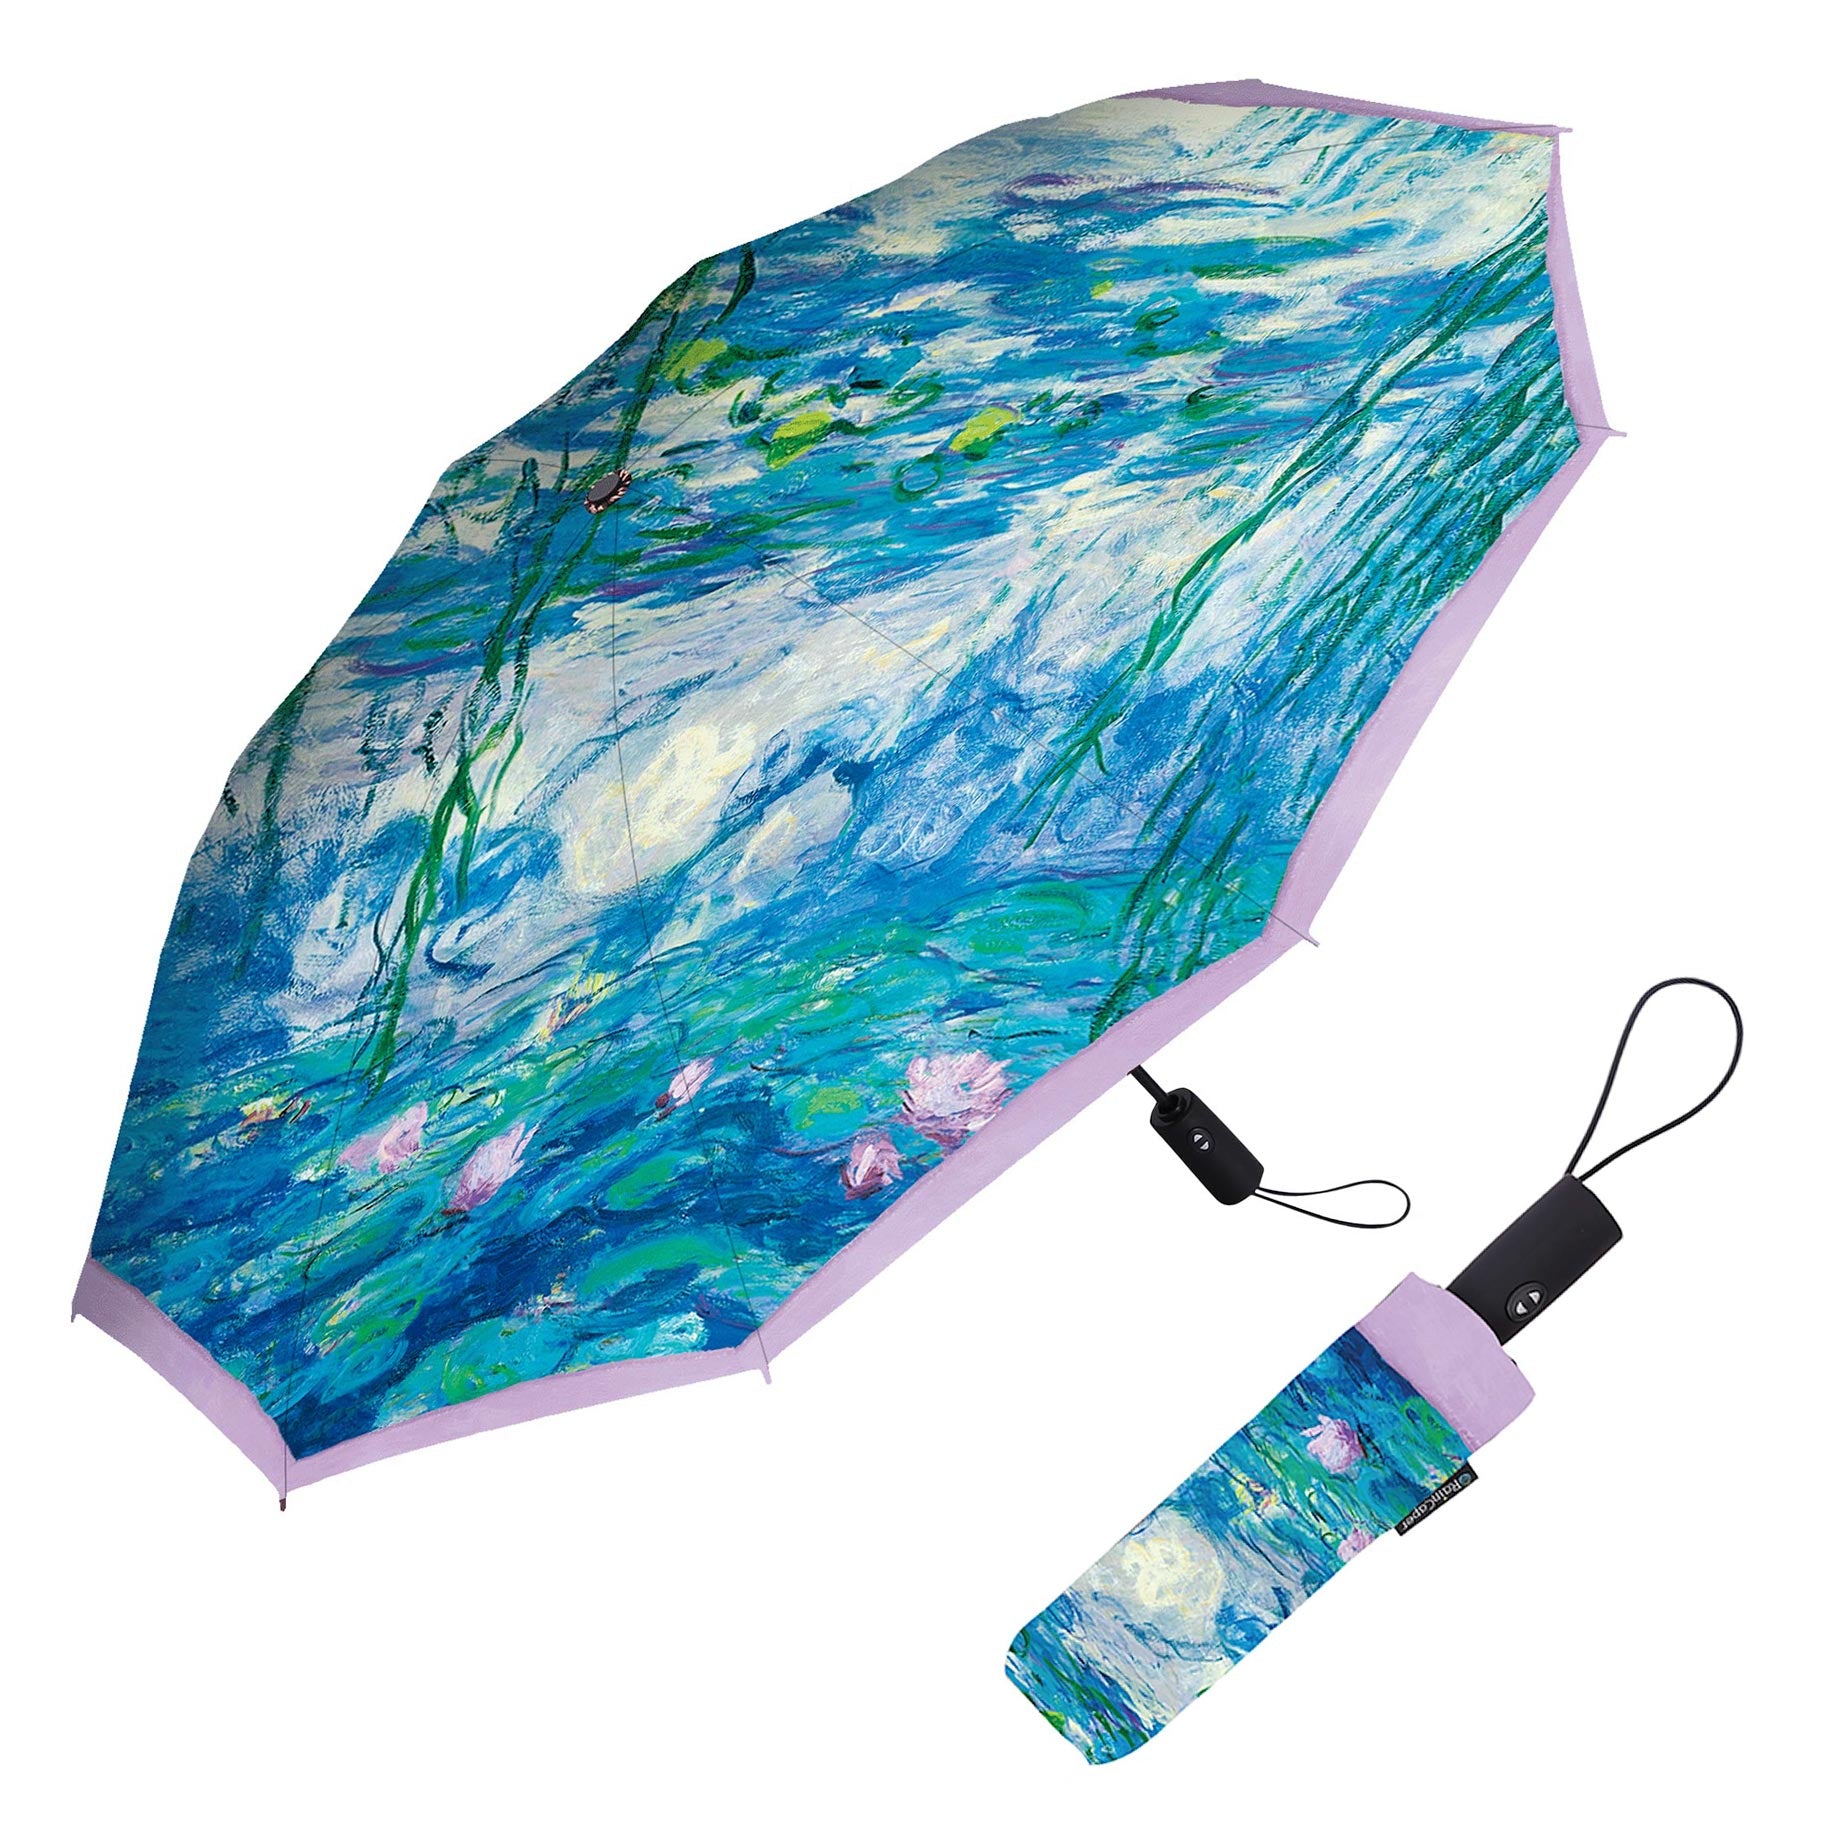 Monet Blue Pond Travel Umbrella